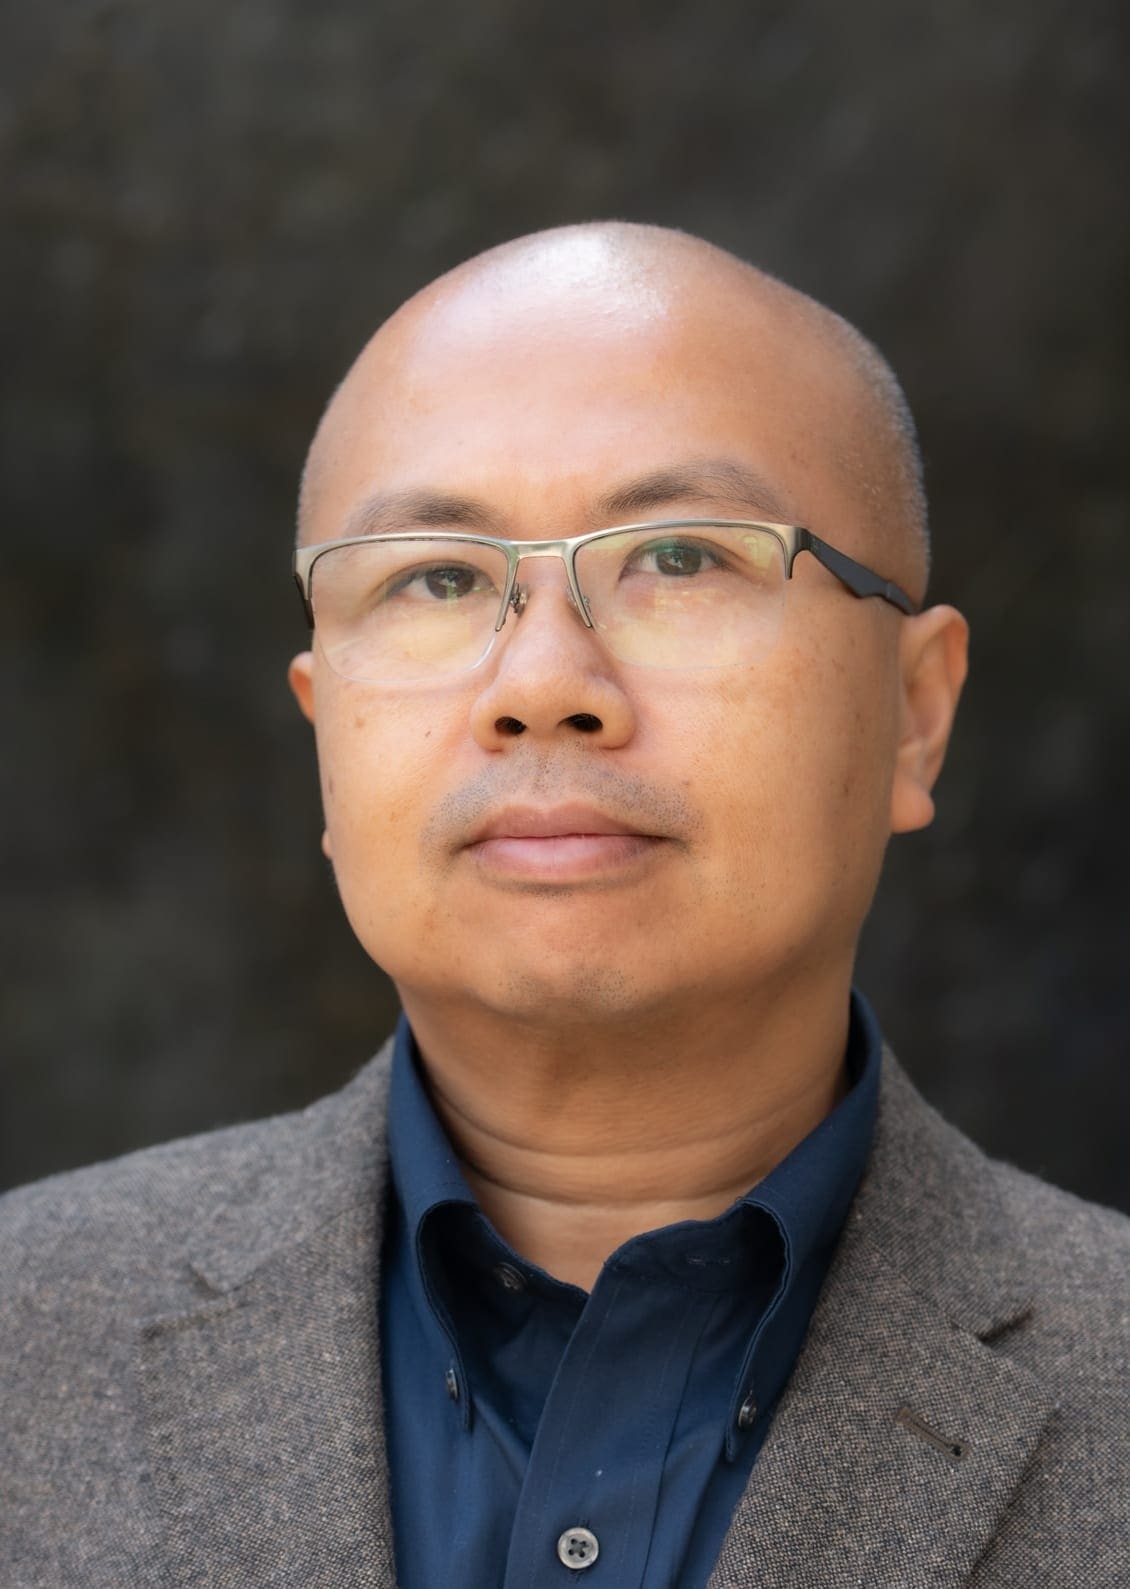 Professor Ho-Fung Hung in The Washington Post